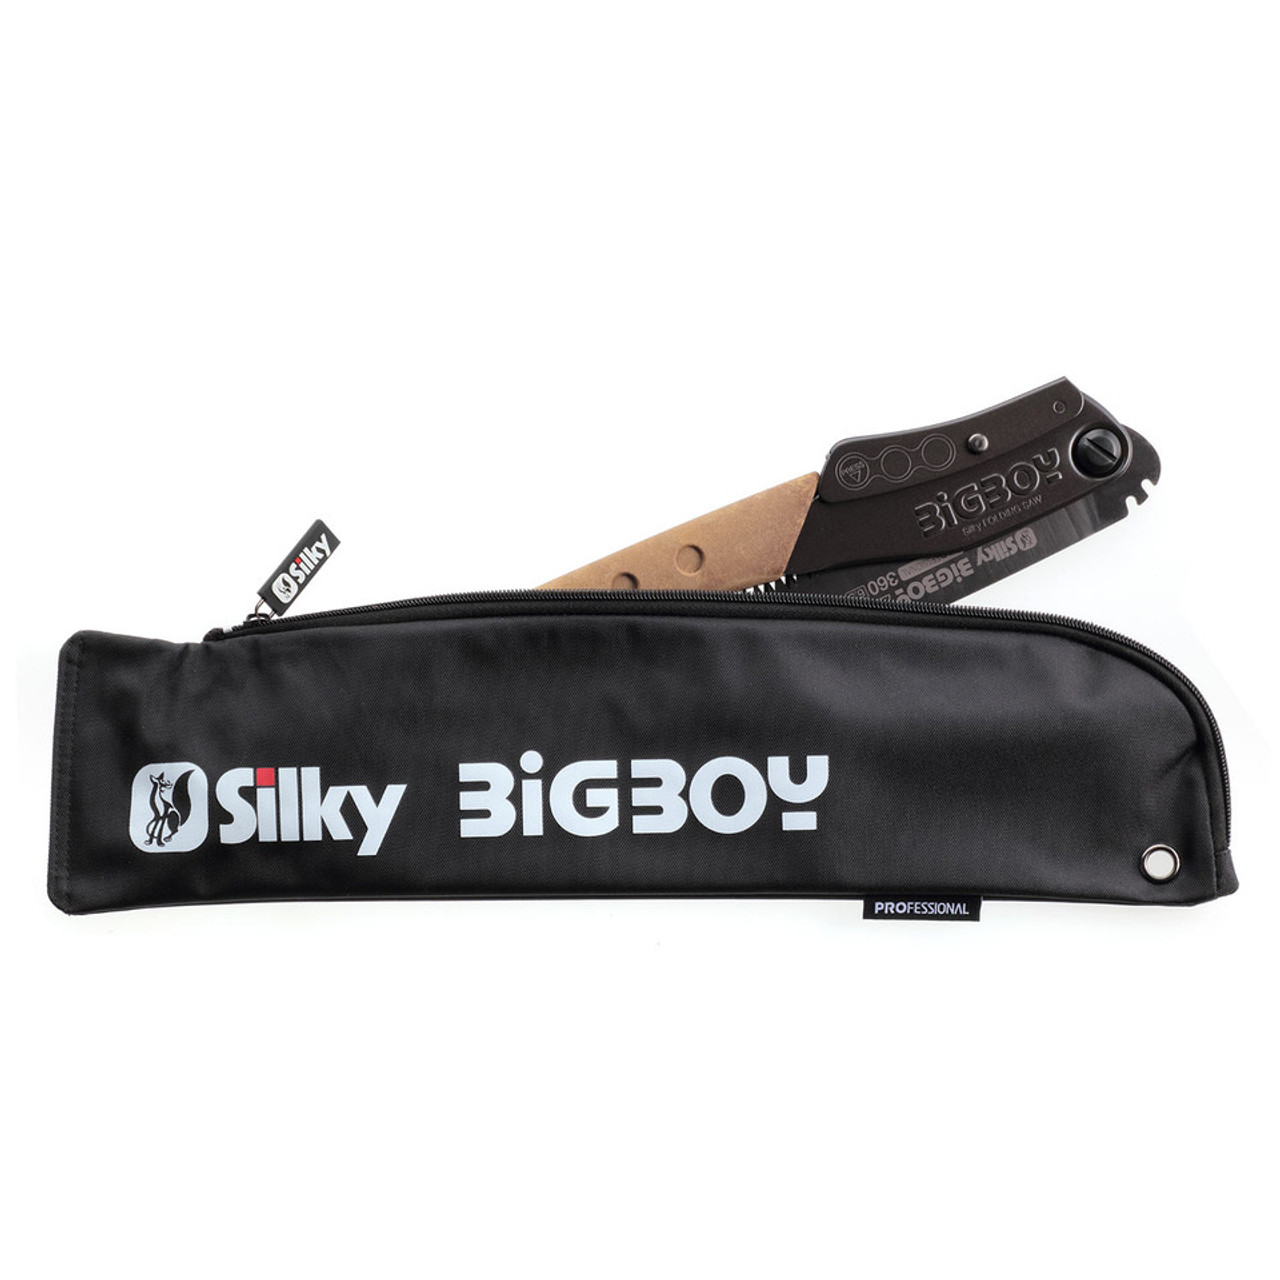 Silky Professional BIGBOY 2000 360mm Outback Edition Folding Saw